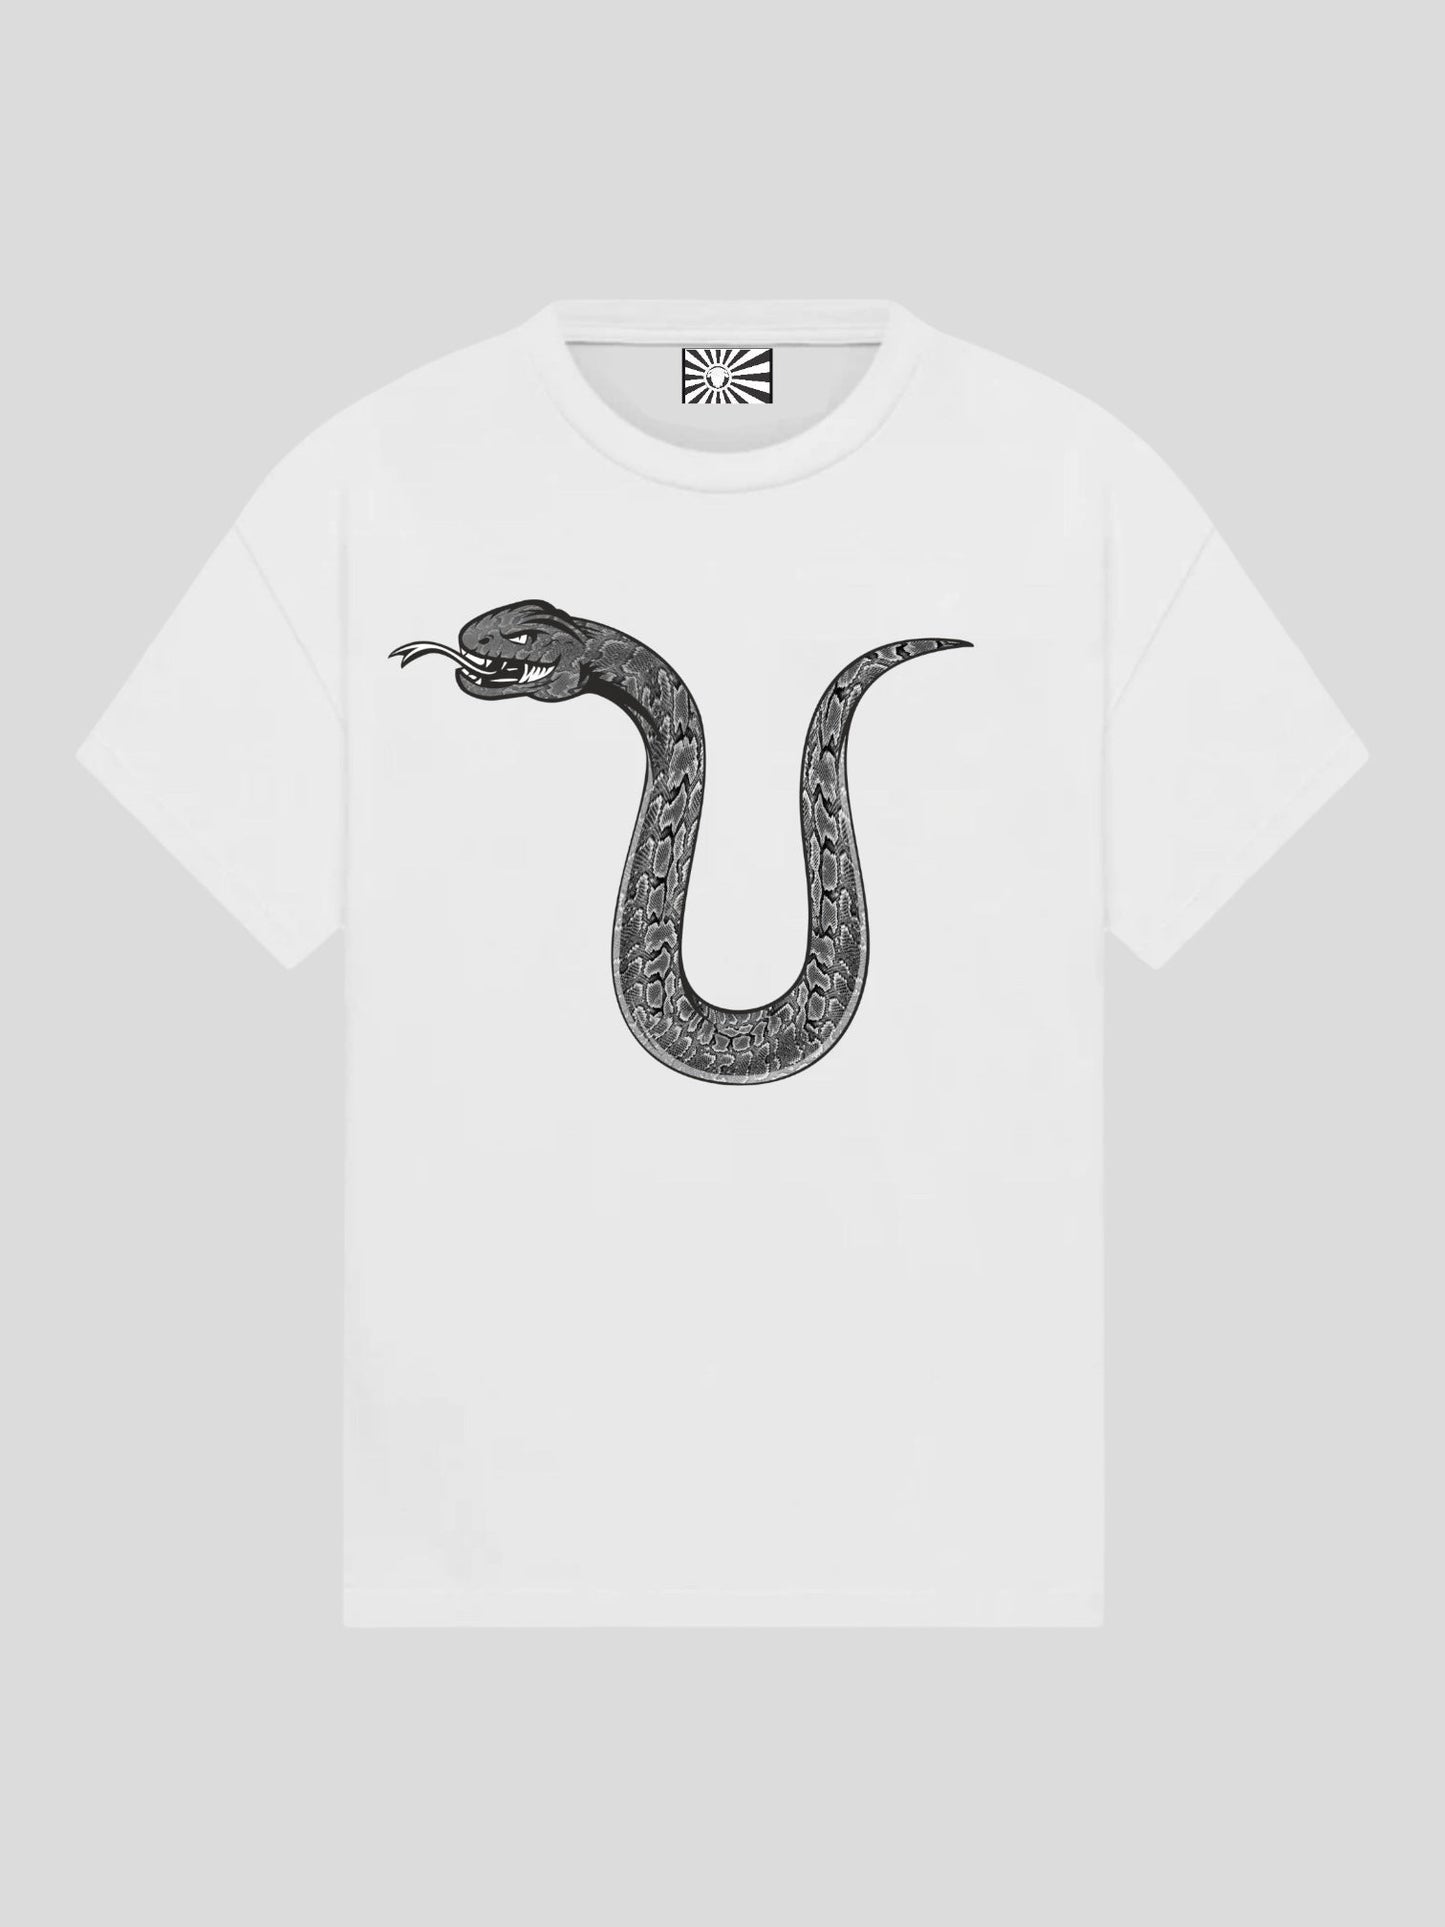 Urbandel tshits S / White Urbandel U Snake Graphic T-shirt